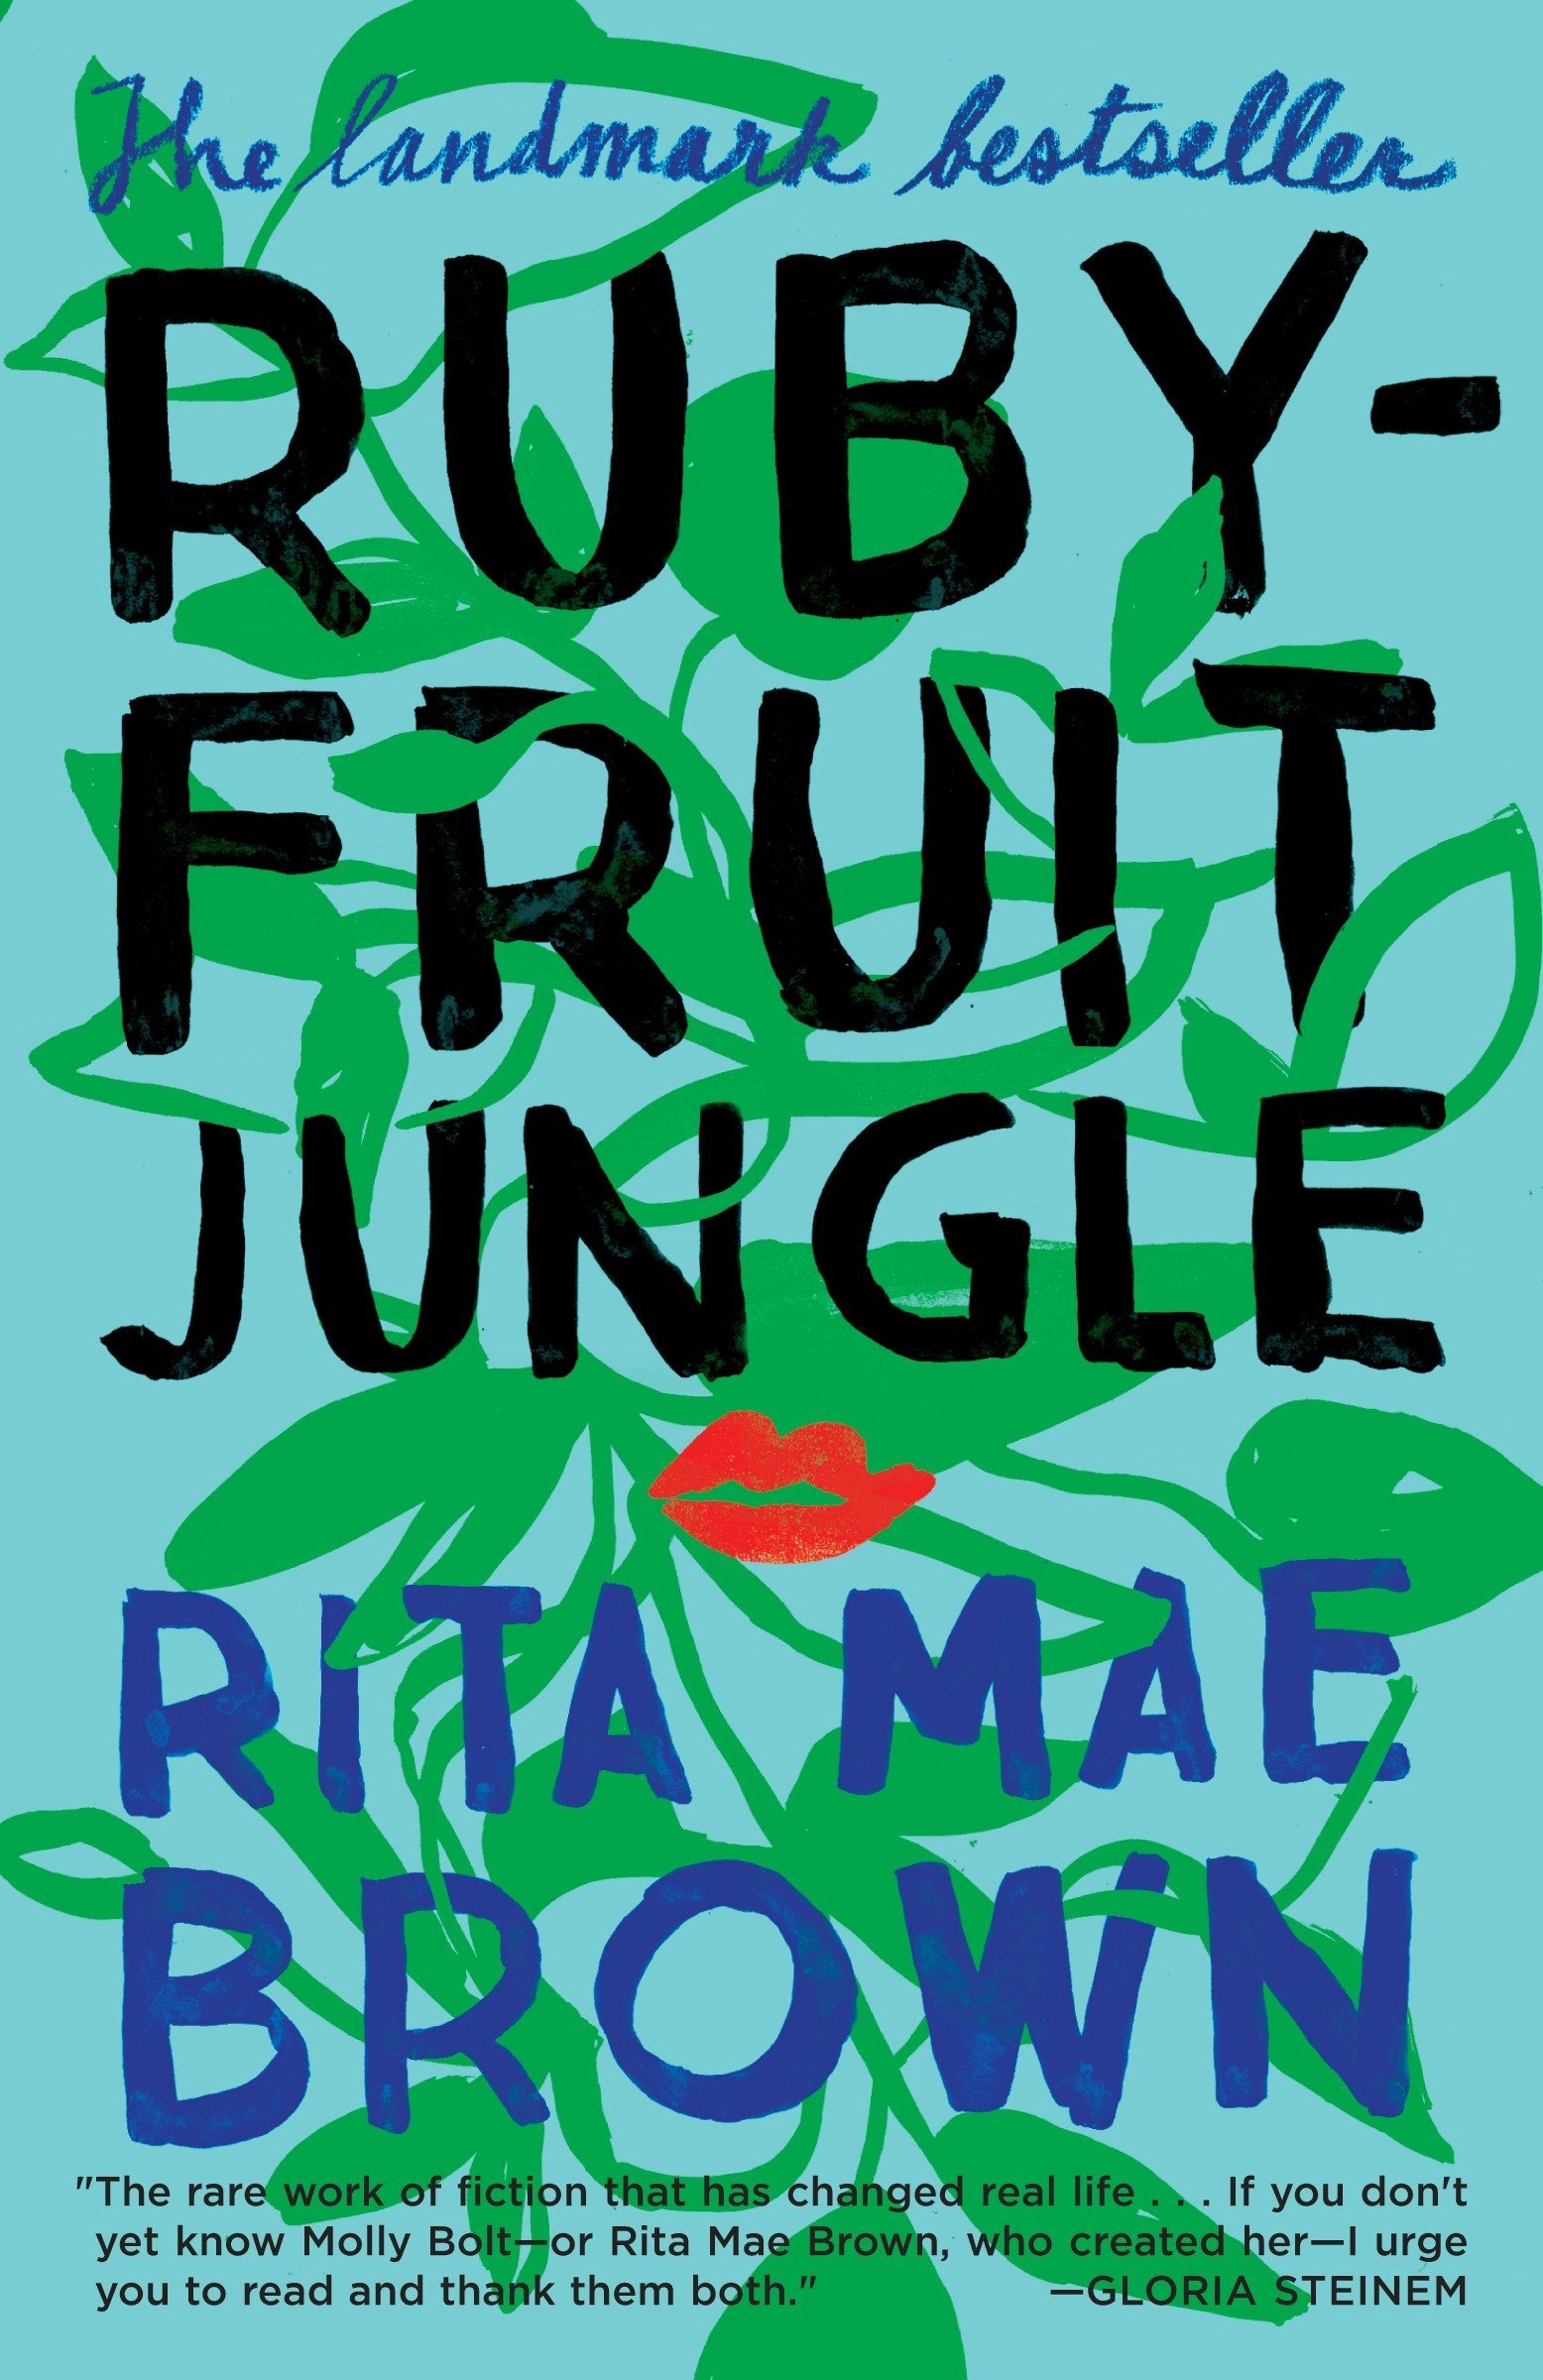 "Rubyfruit Jungle" by Rita Mae Brown